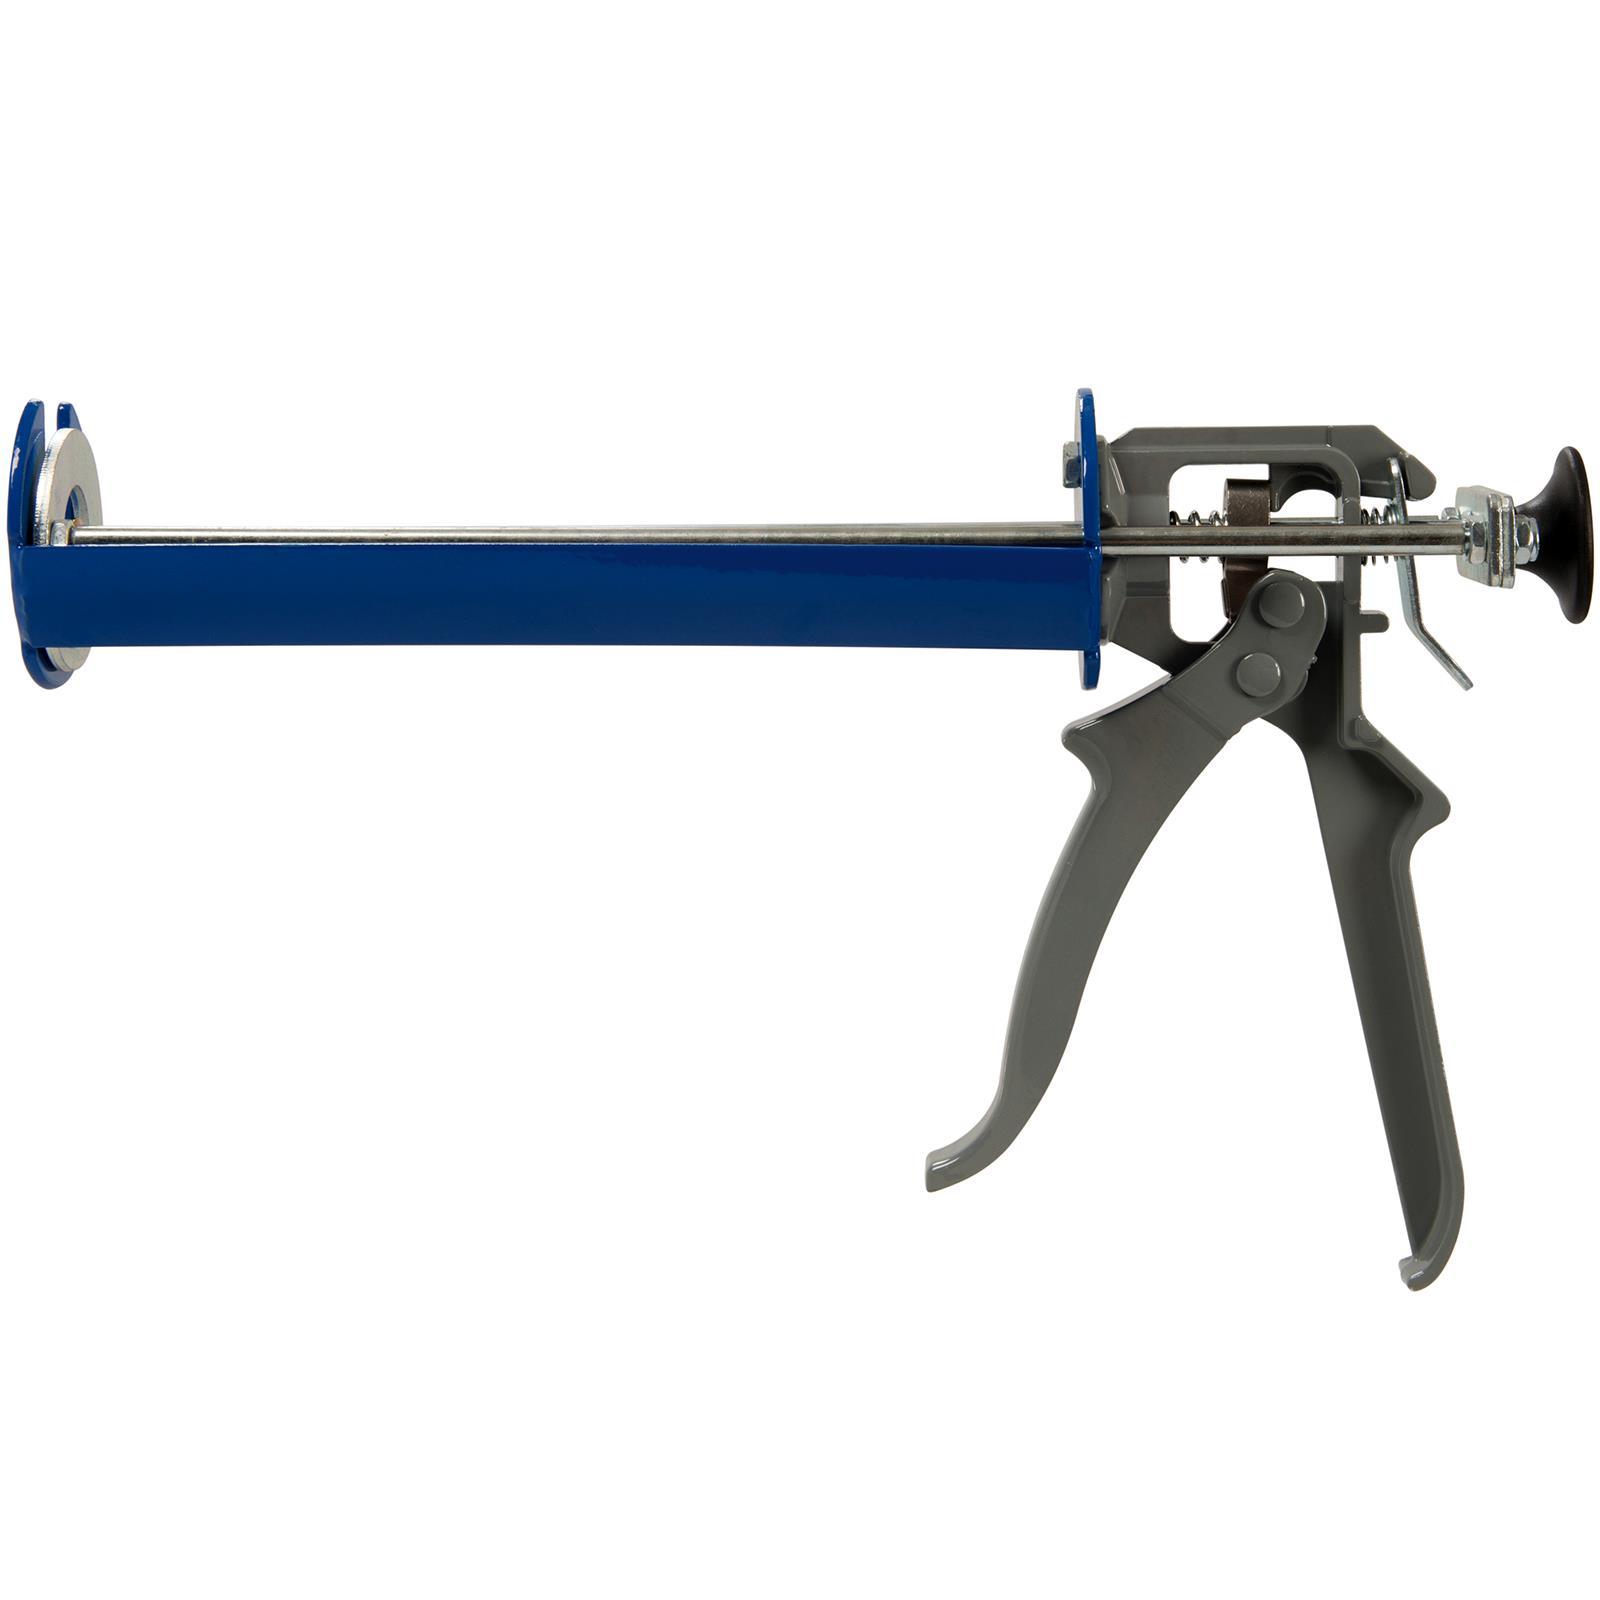 Silverline 380ml Resin Applicator Gun